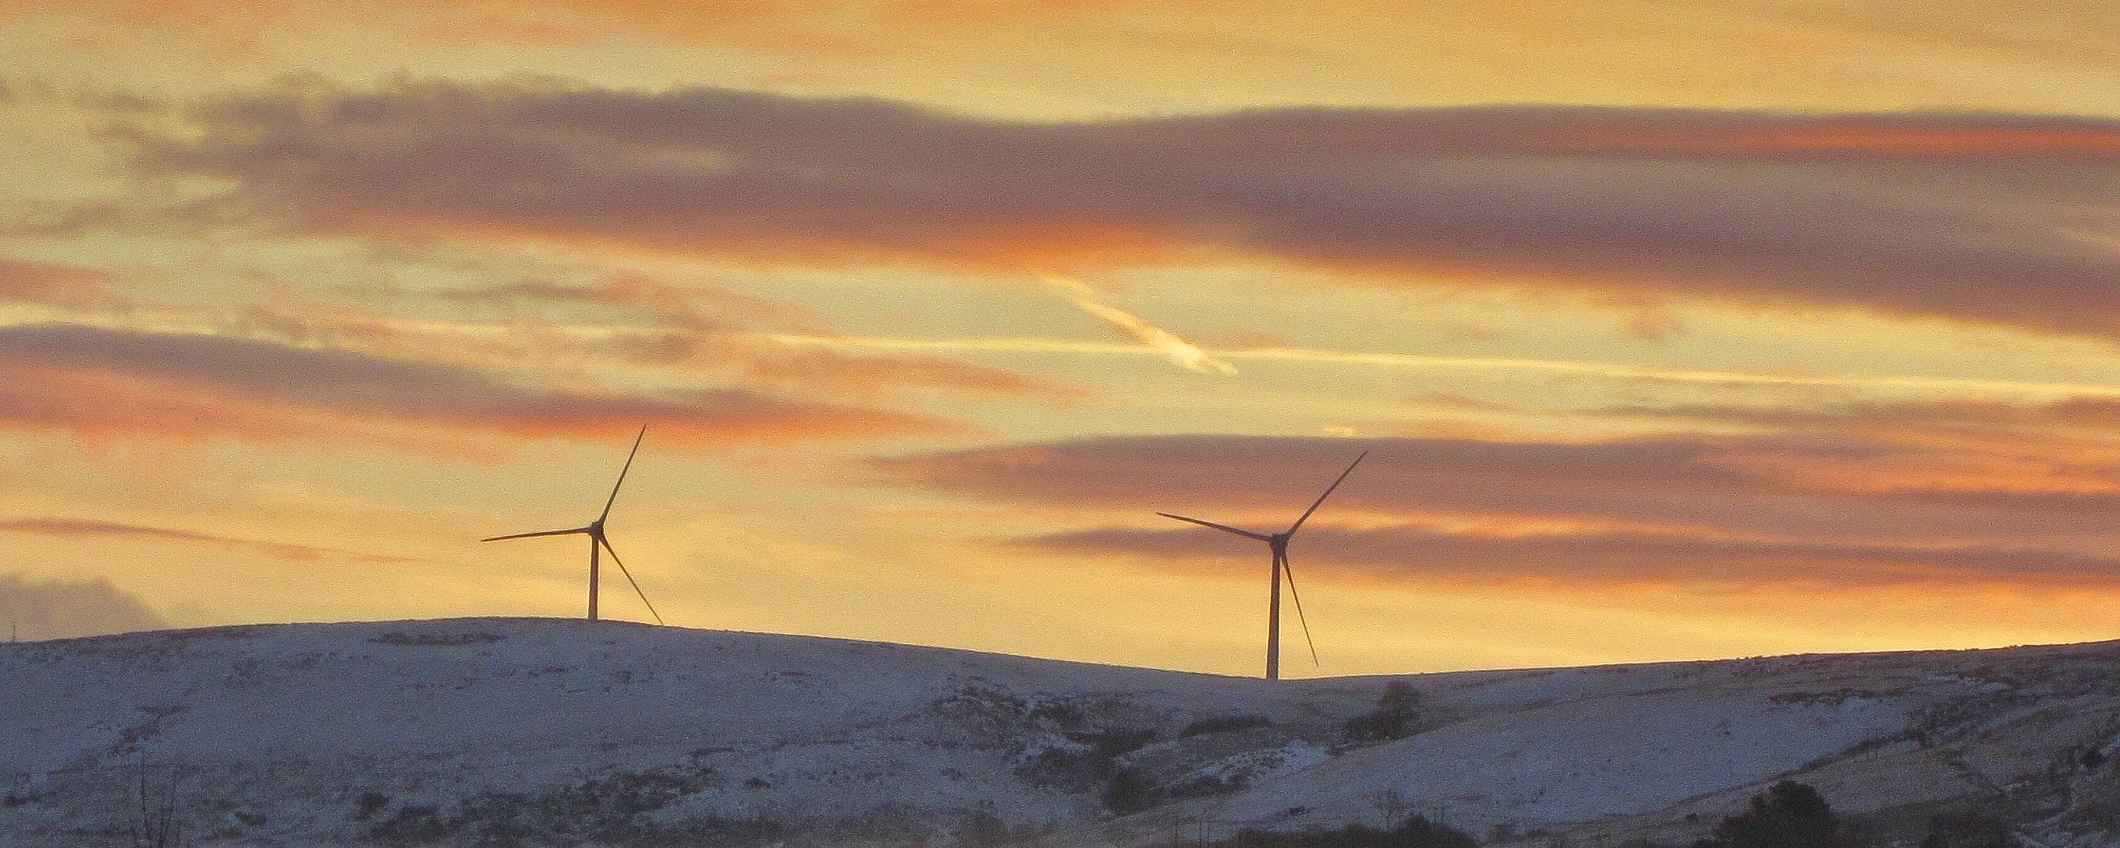 Wind energy park in snowy landscape